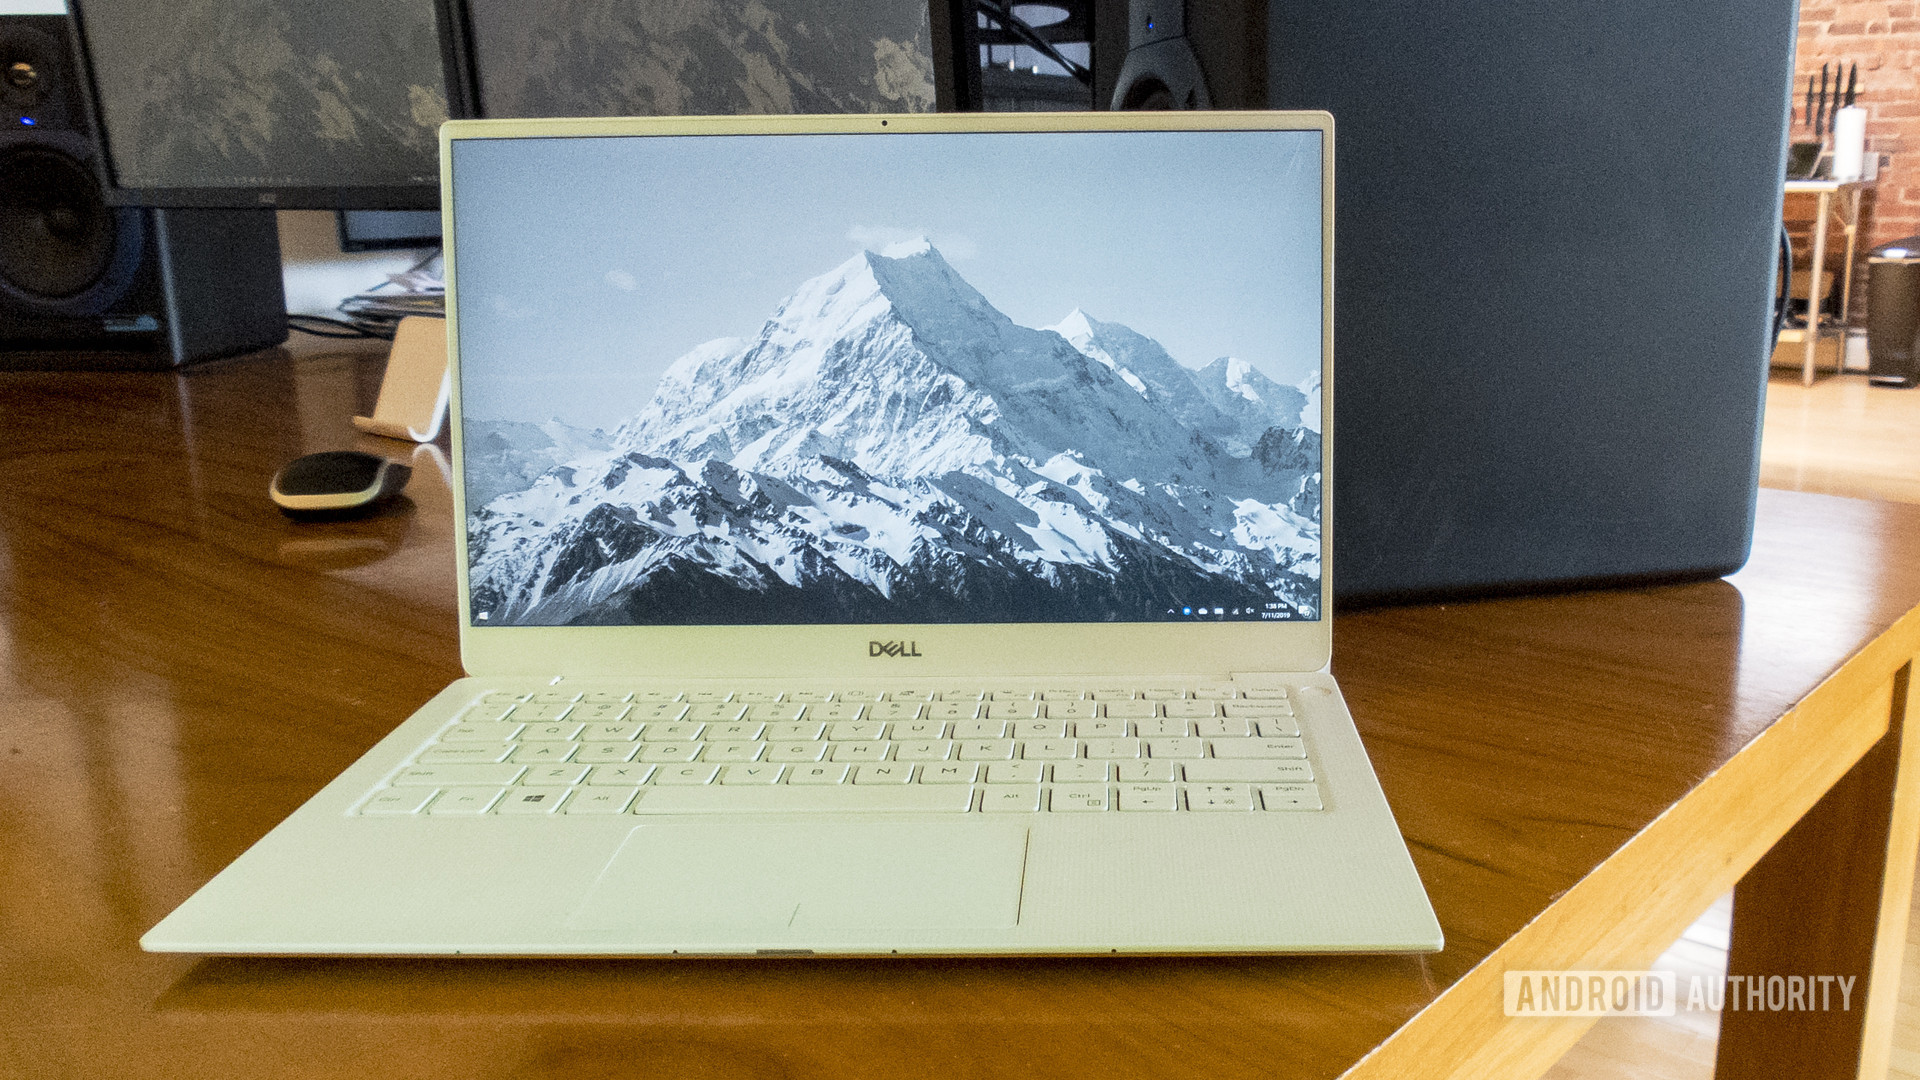 Dell XPS 13 2019版坐在桌子上，带有山景照片作为背景。